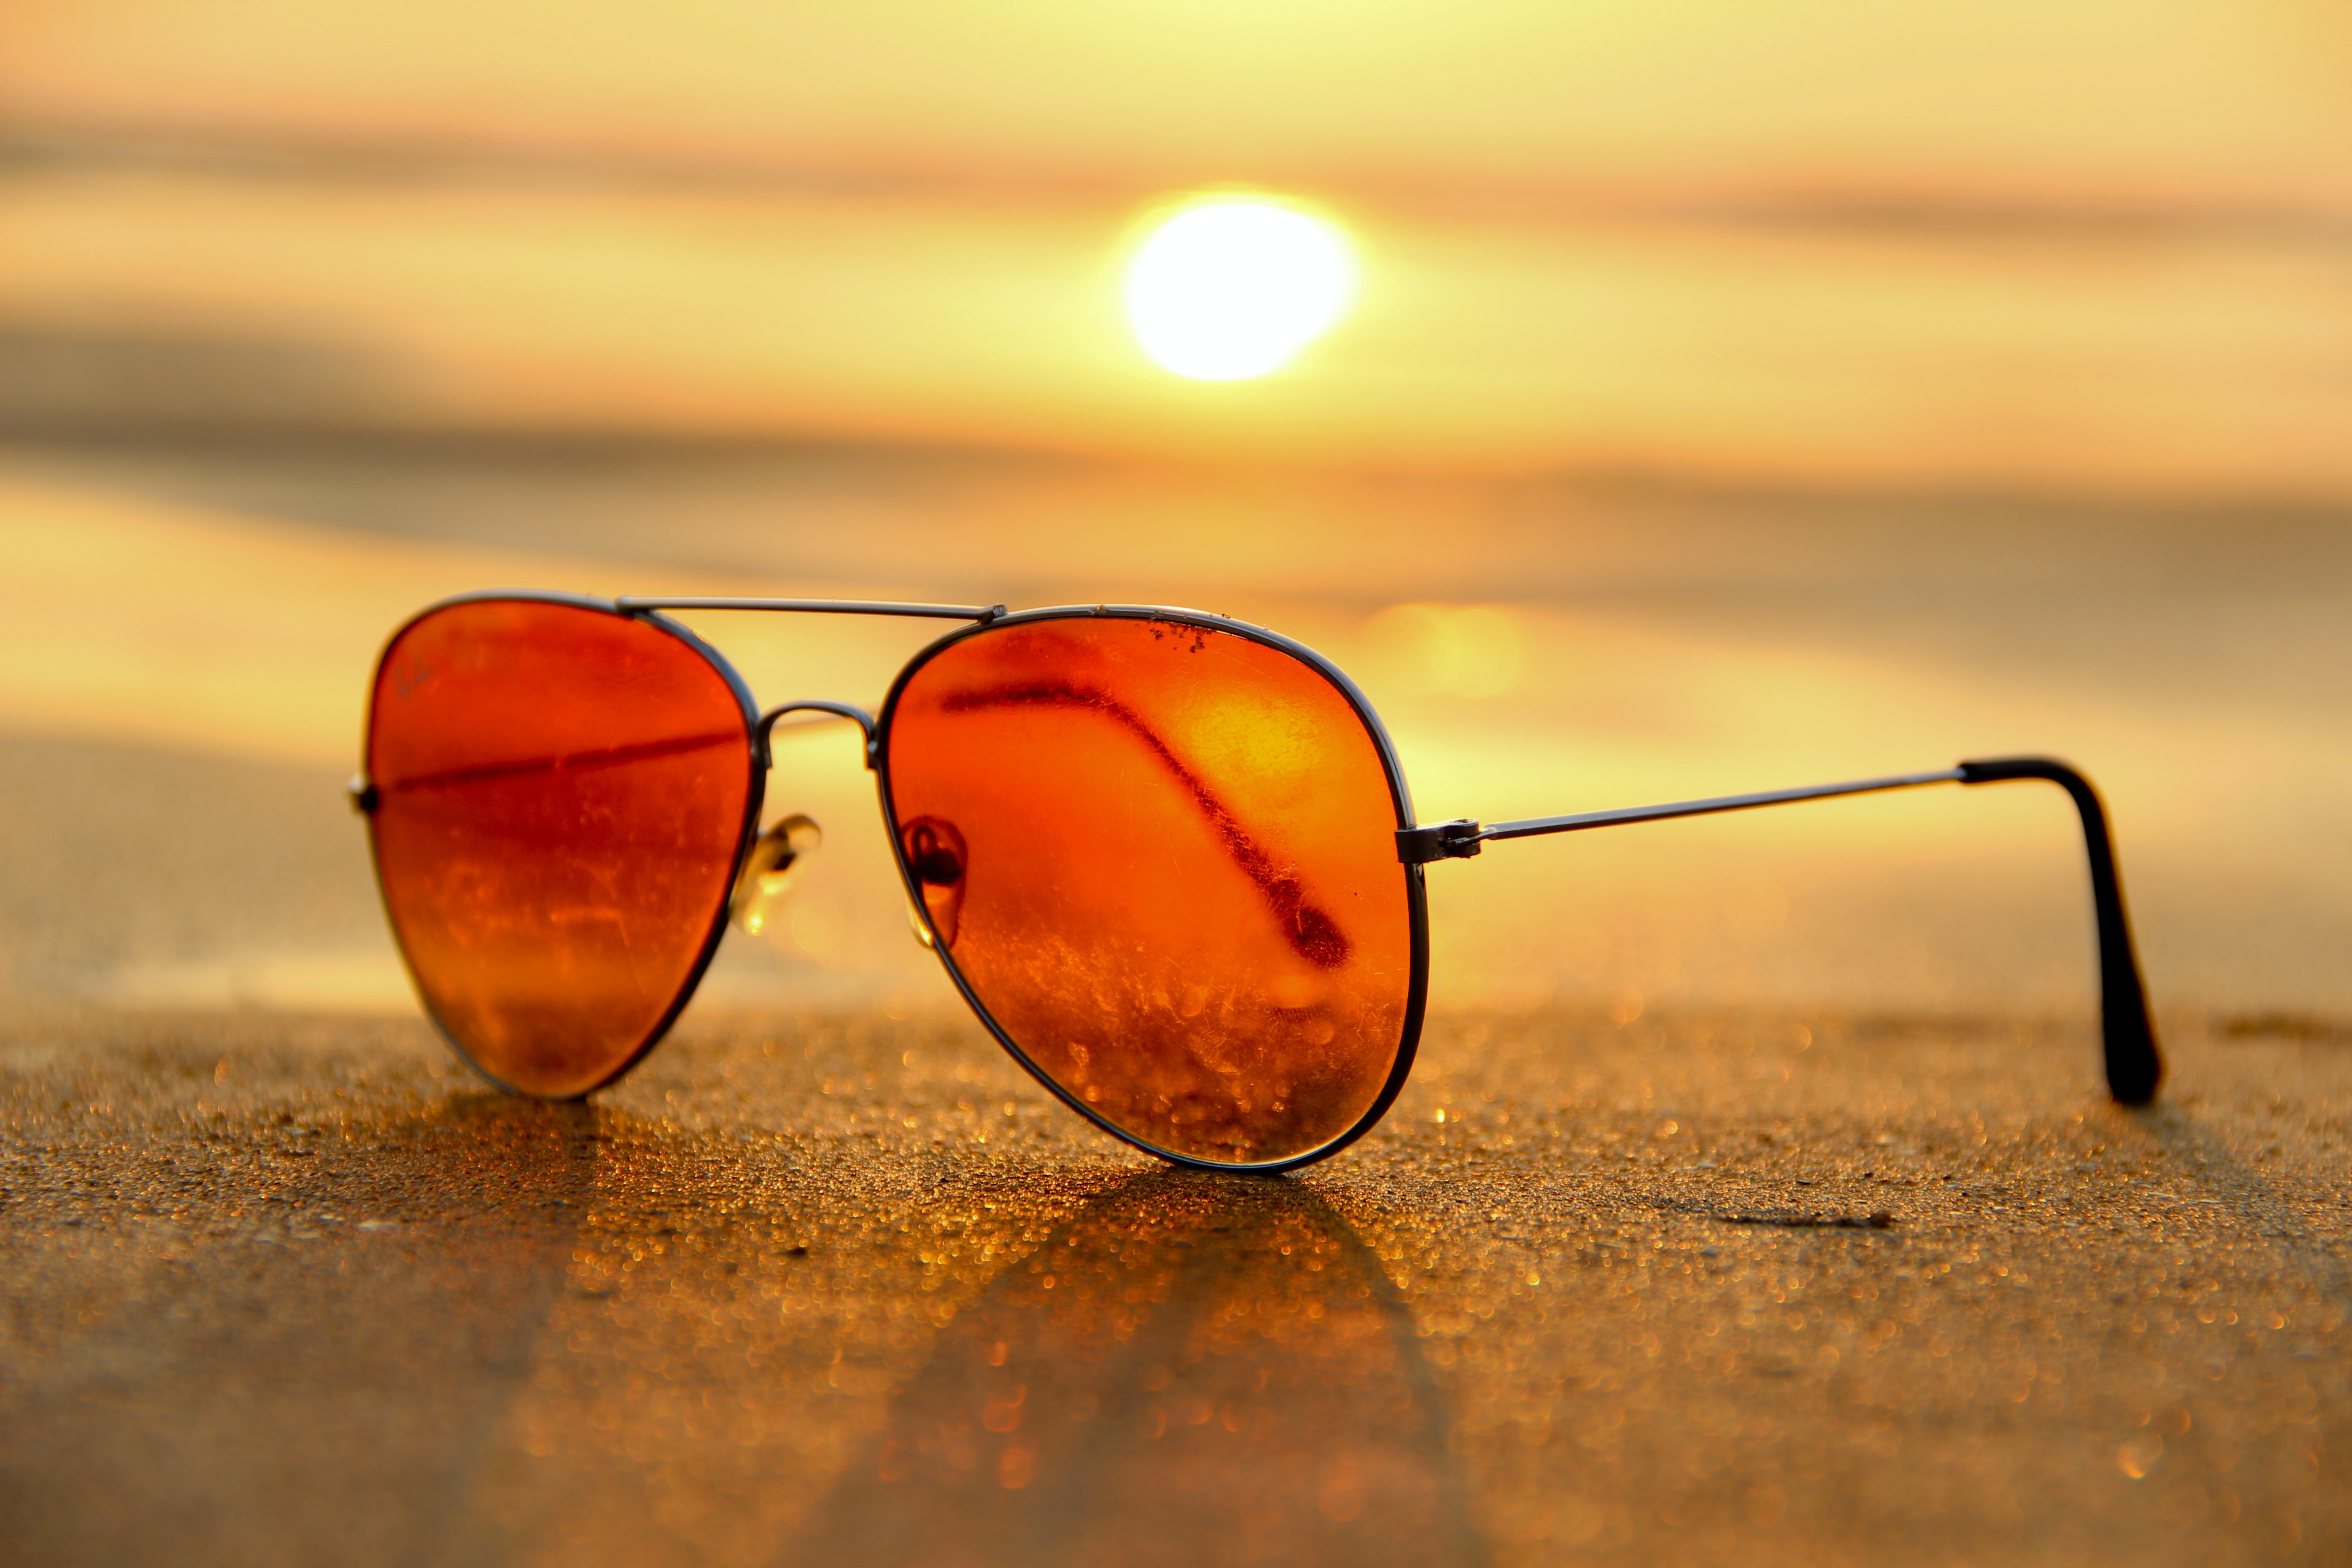 Beach Sunglasses Wallpapers